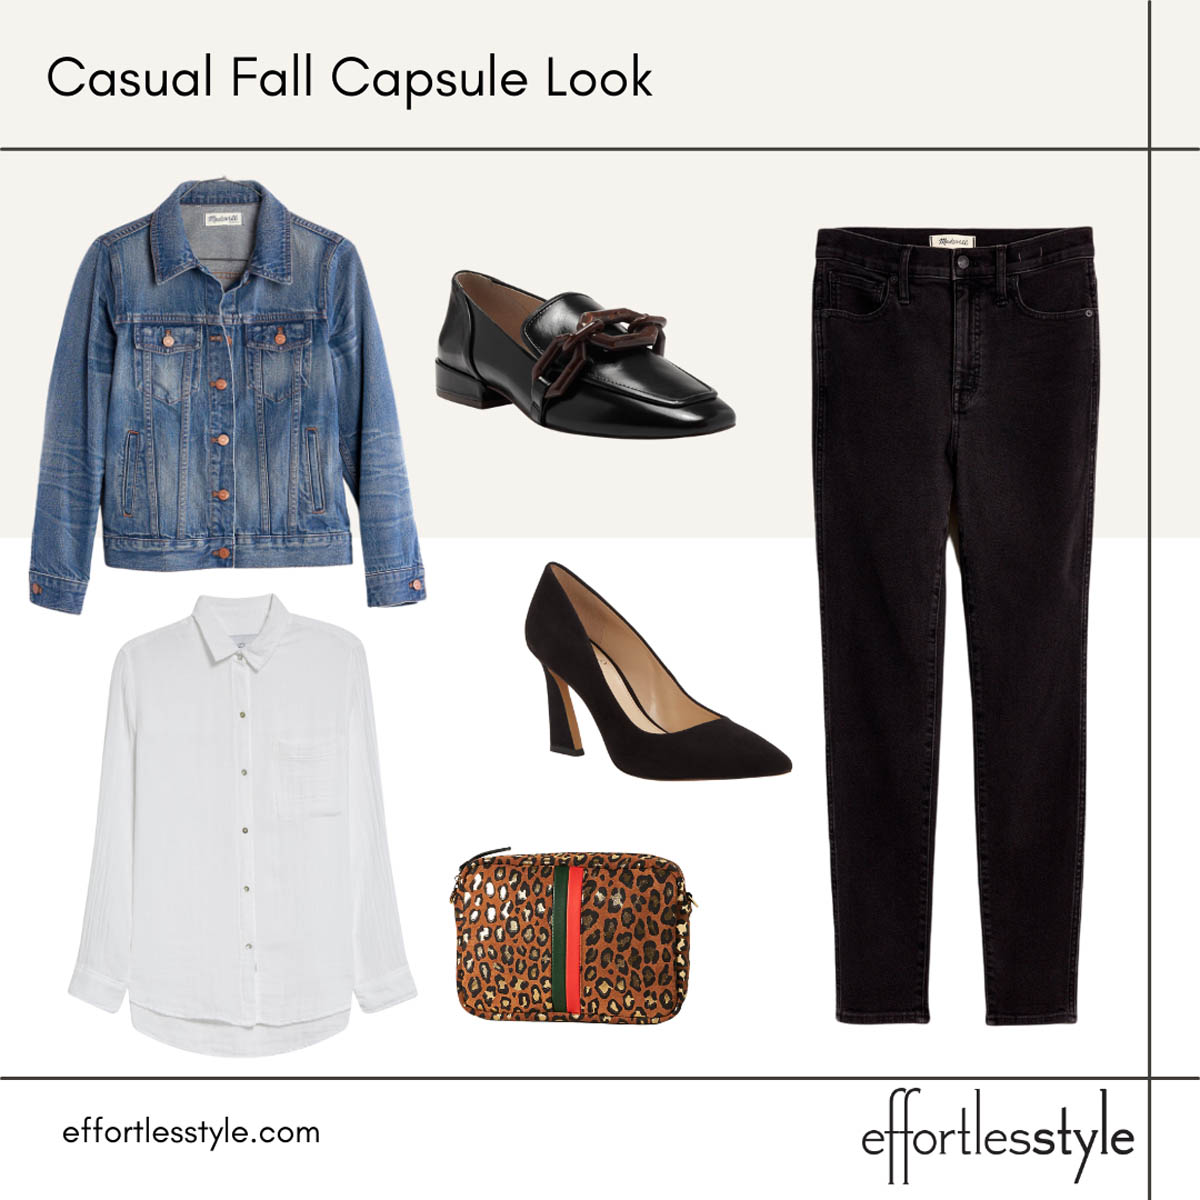 Fall Capsule Wardrobe Looks Denim Jacket & Black Jeans Dressed Up